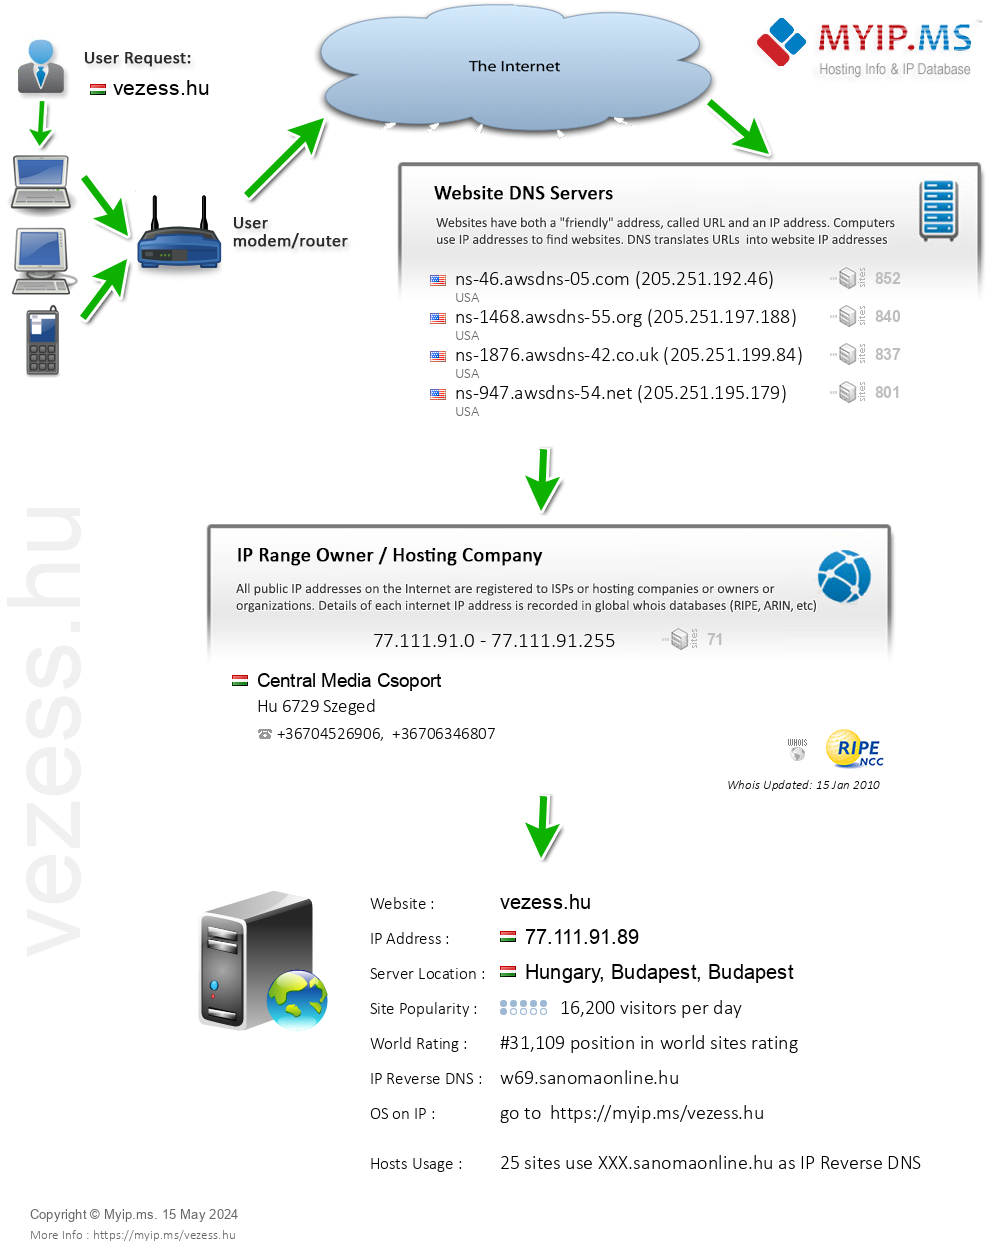 Vezess.hu - Website Hosting Visual IP Diagram